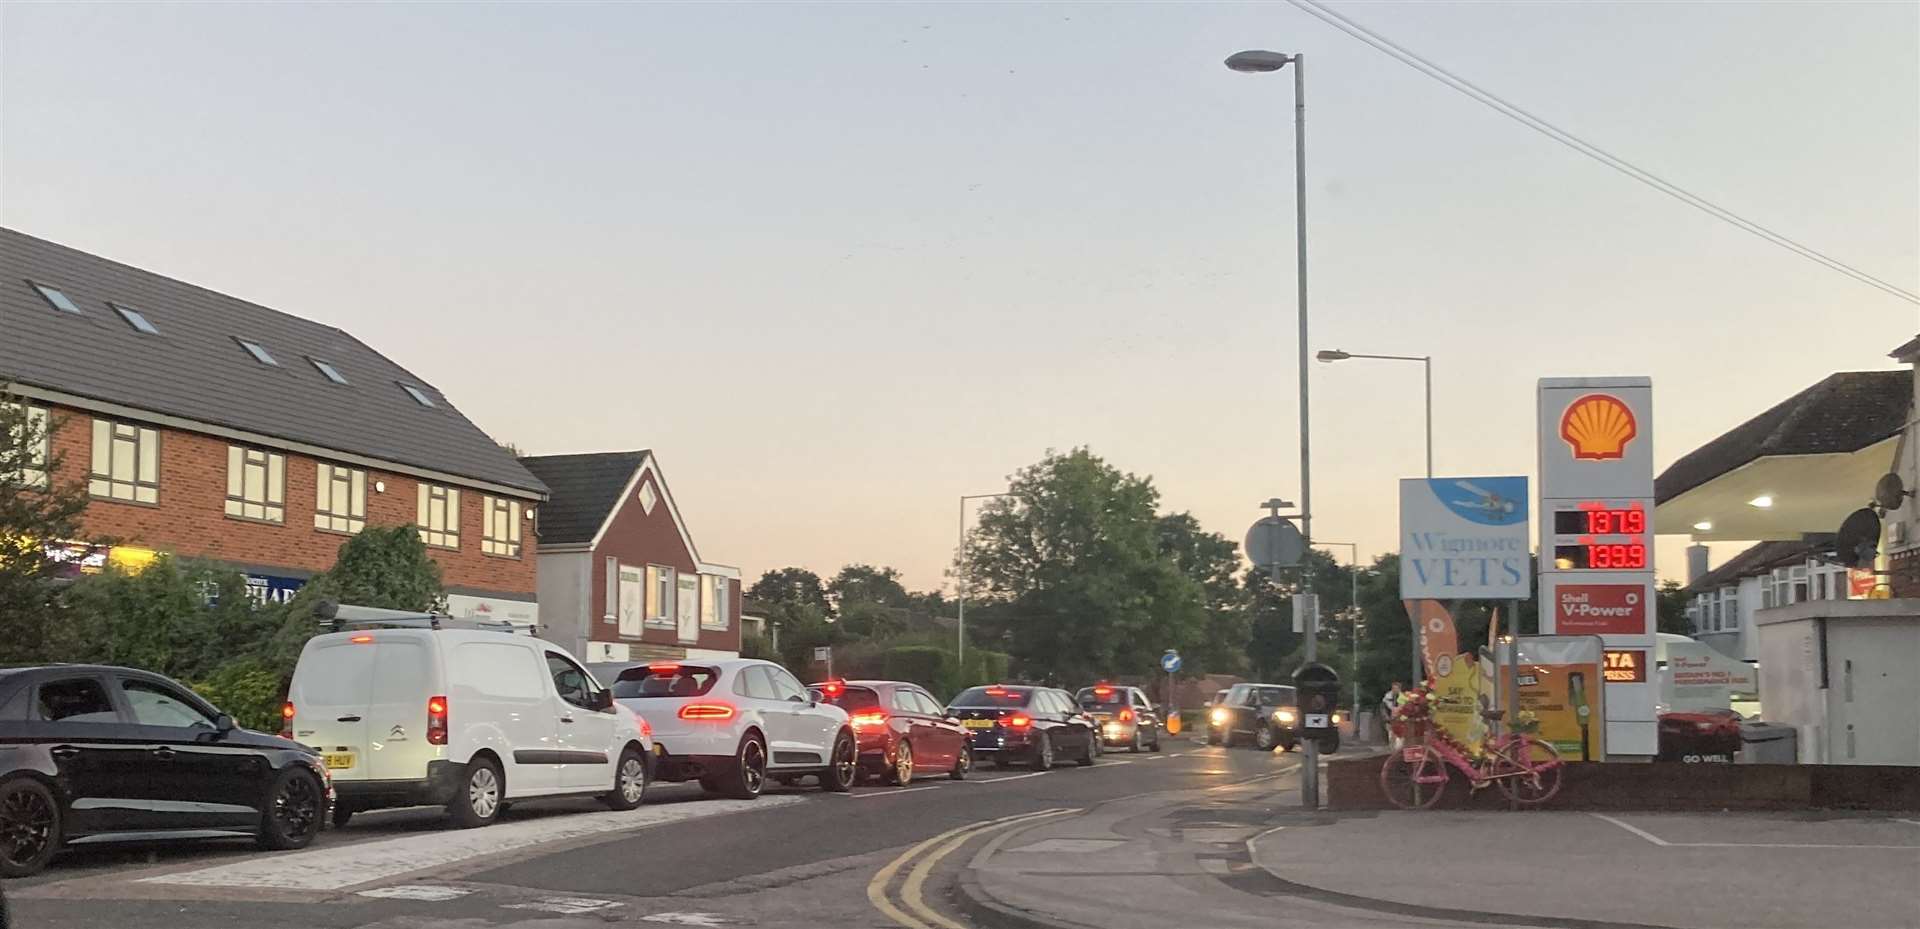 Queuing traffic waiting to access a petrol station in Wigmore, near Rainham